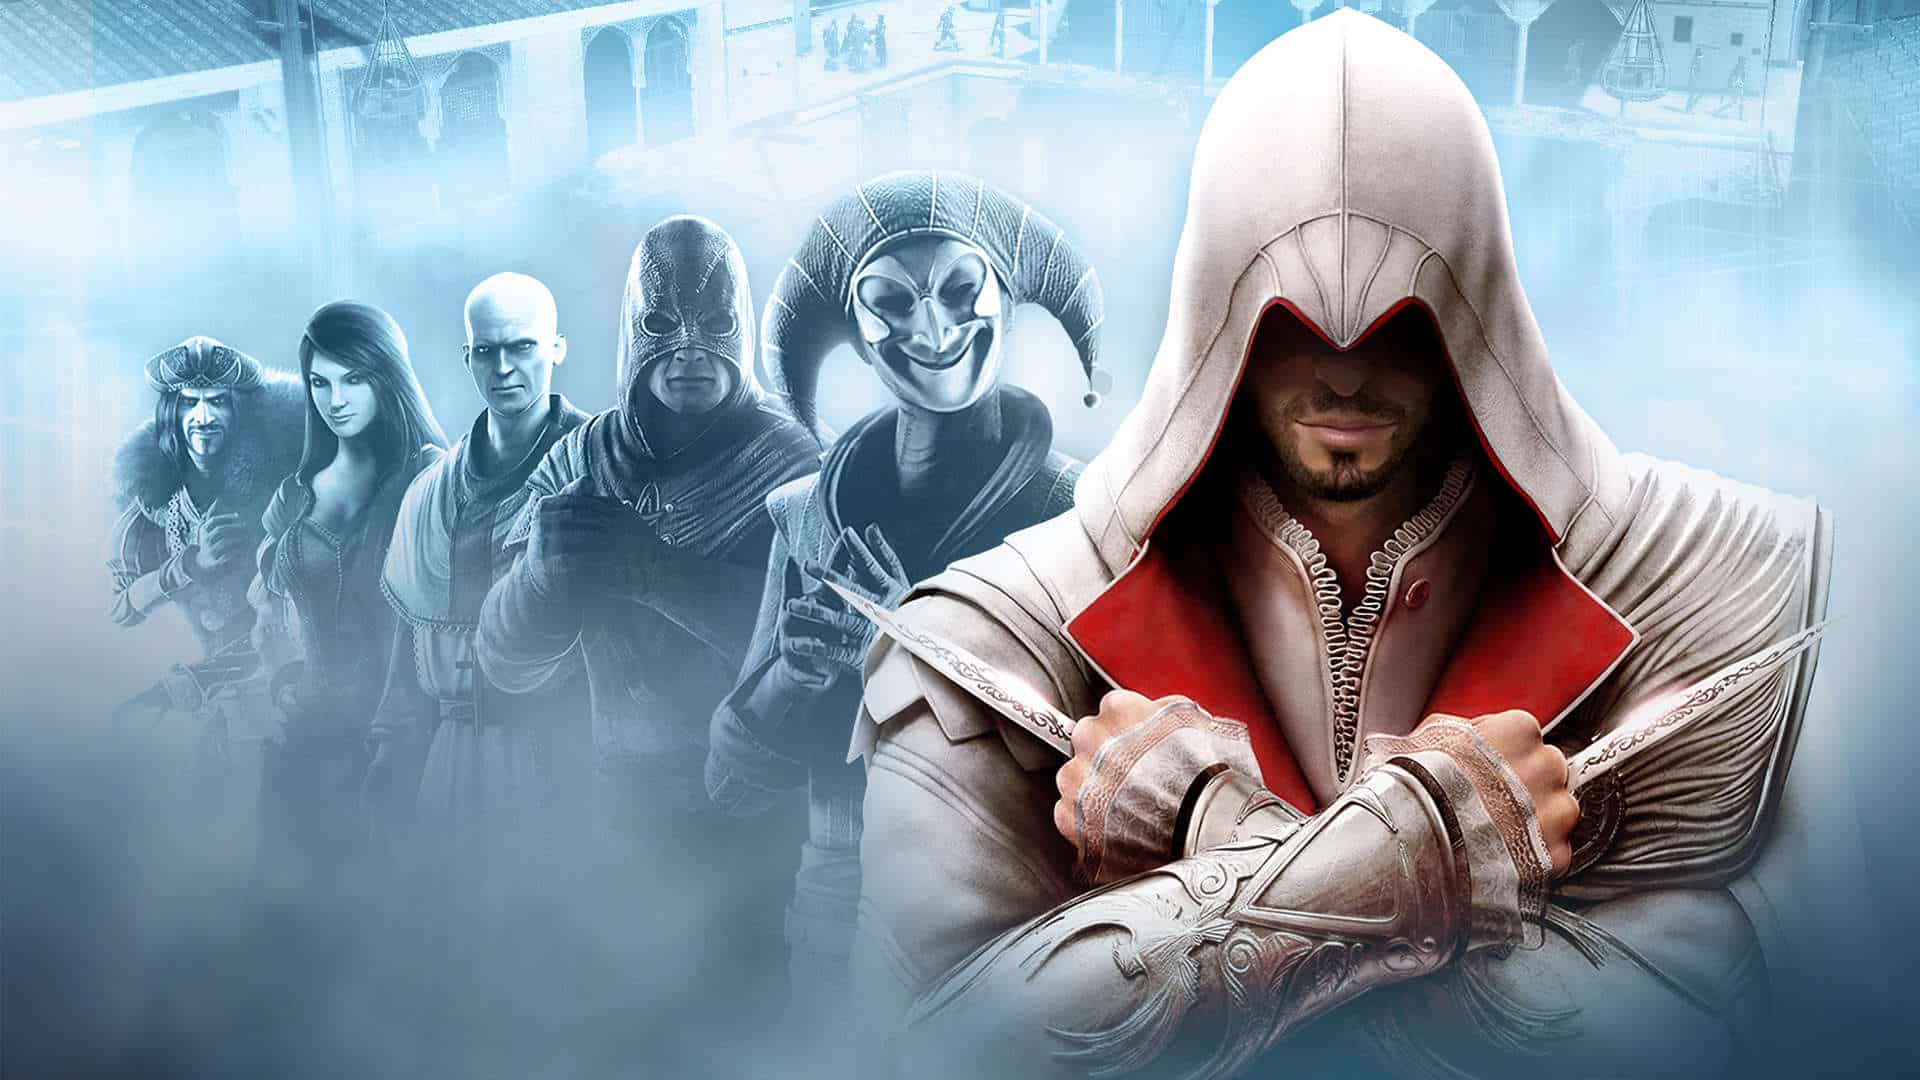 Assassin's Creed Brotherhood Promo Image